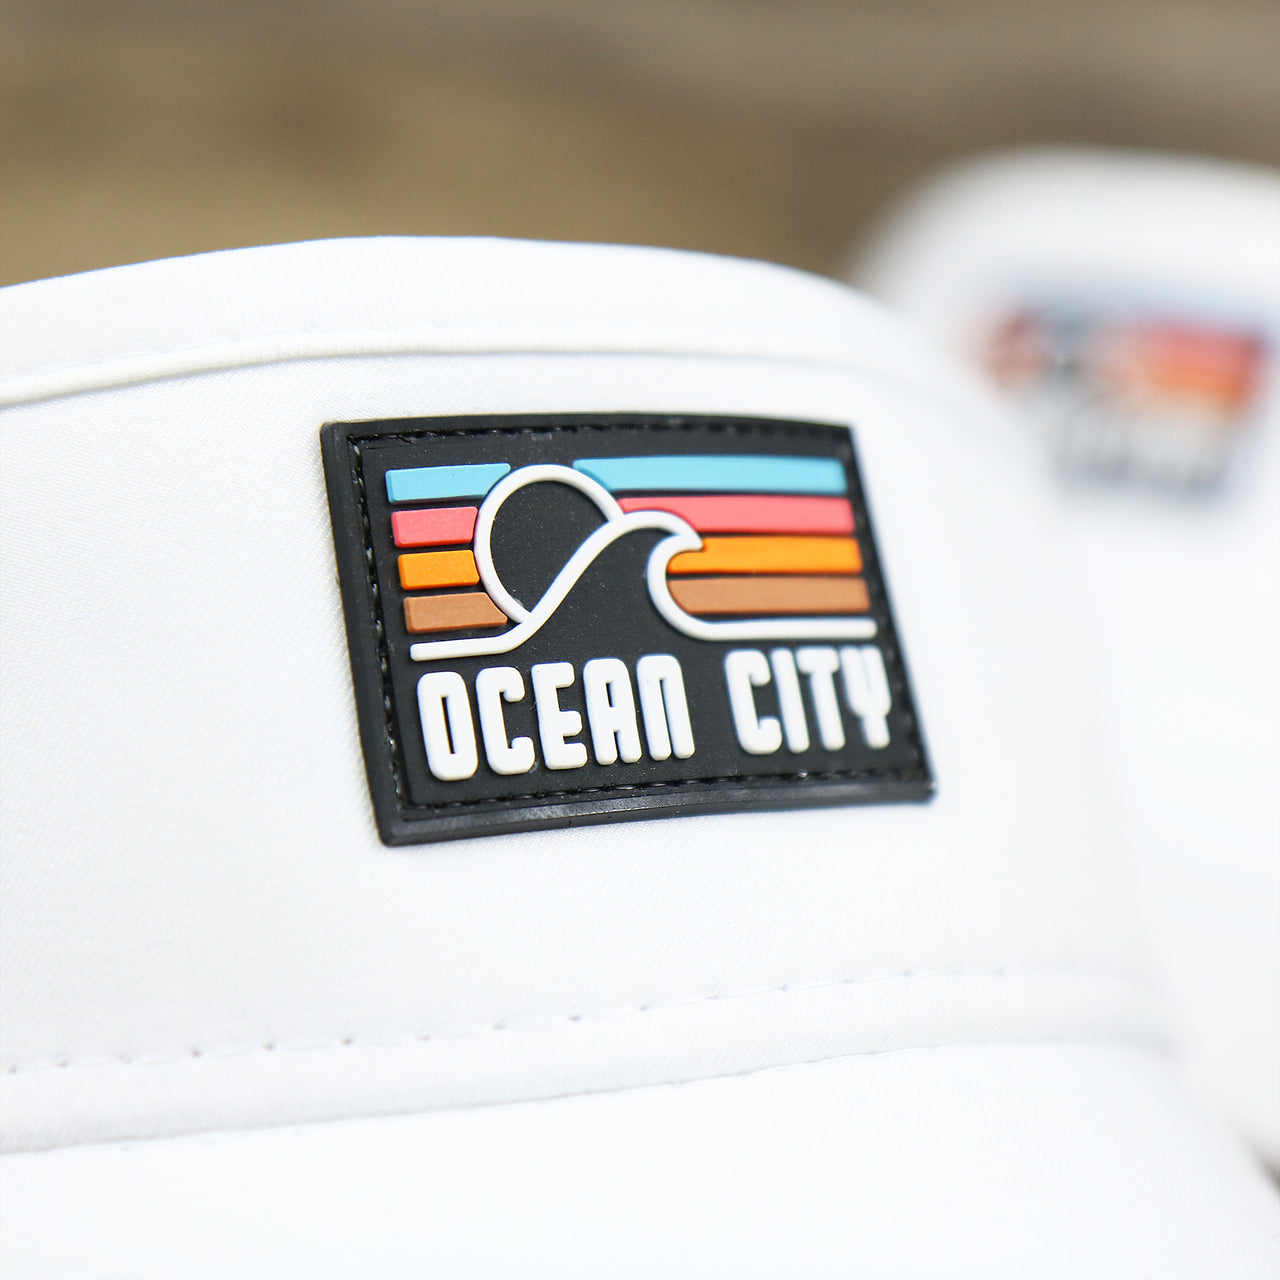 The Ocean City Sunset Rubber patch on the New Jersey High Point PVC Ocean City Rubber Patch Cool Fit Adjustable Visor | White Visor